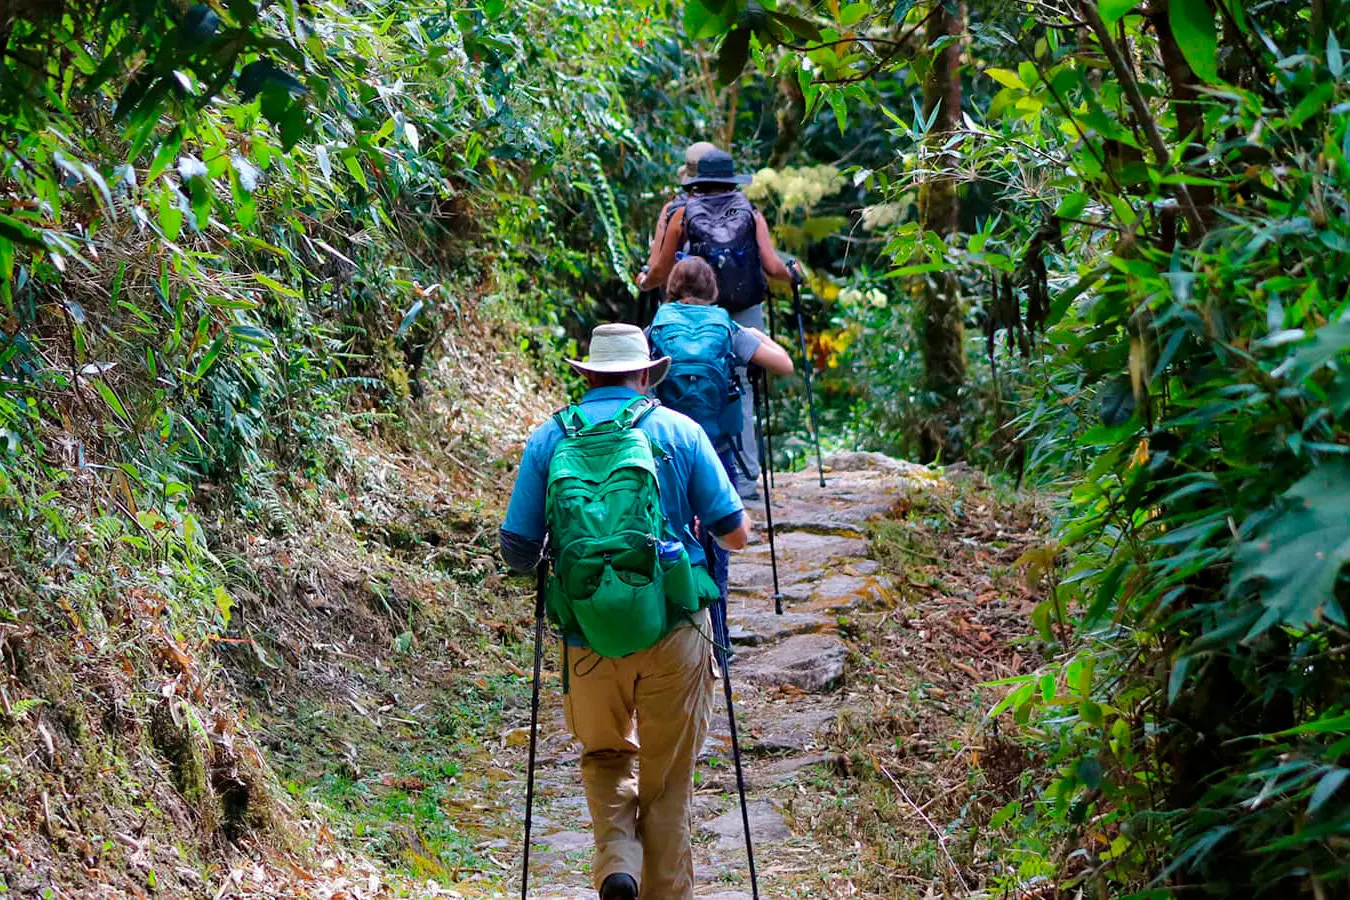 Inca trail